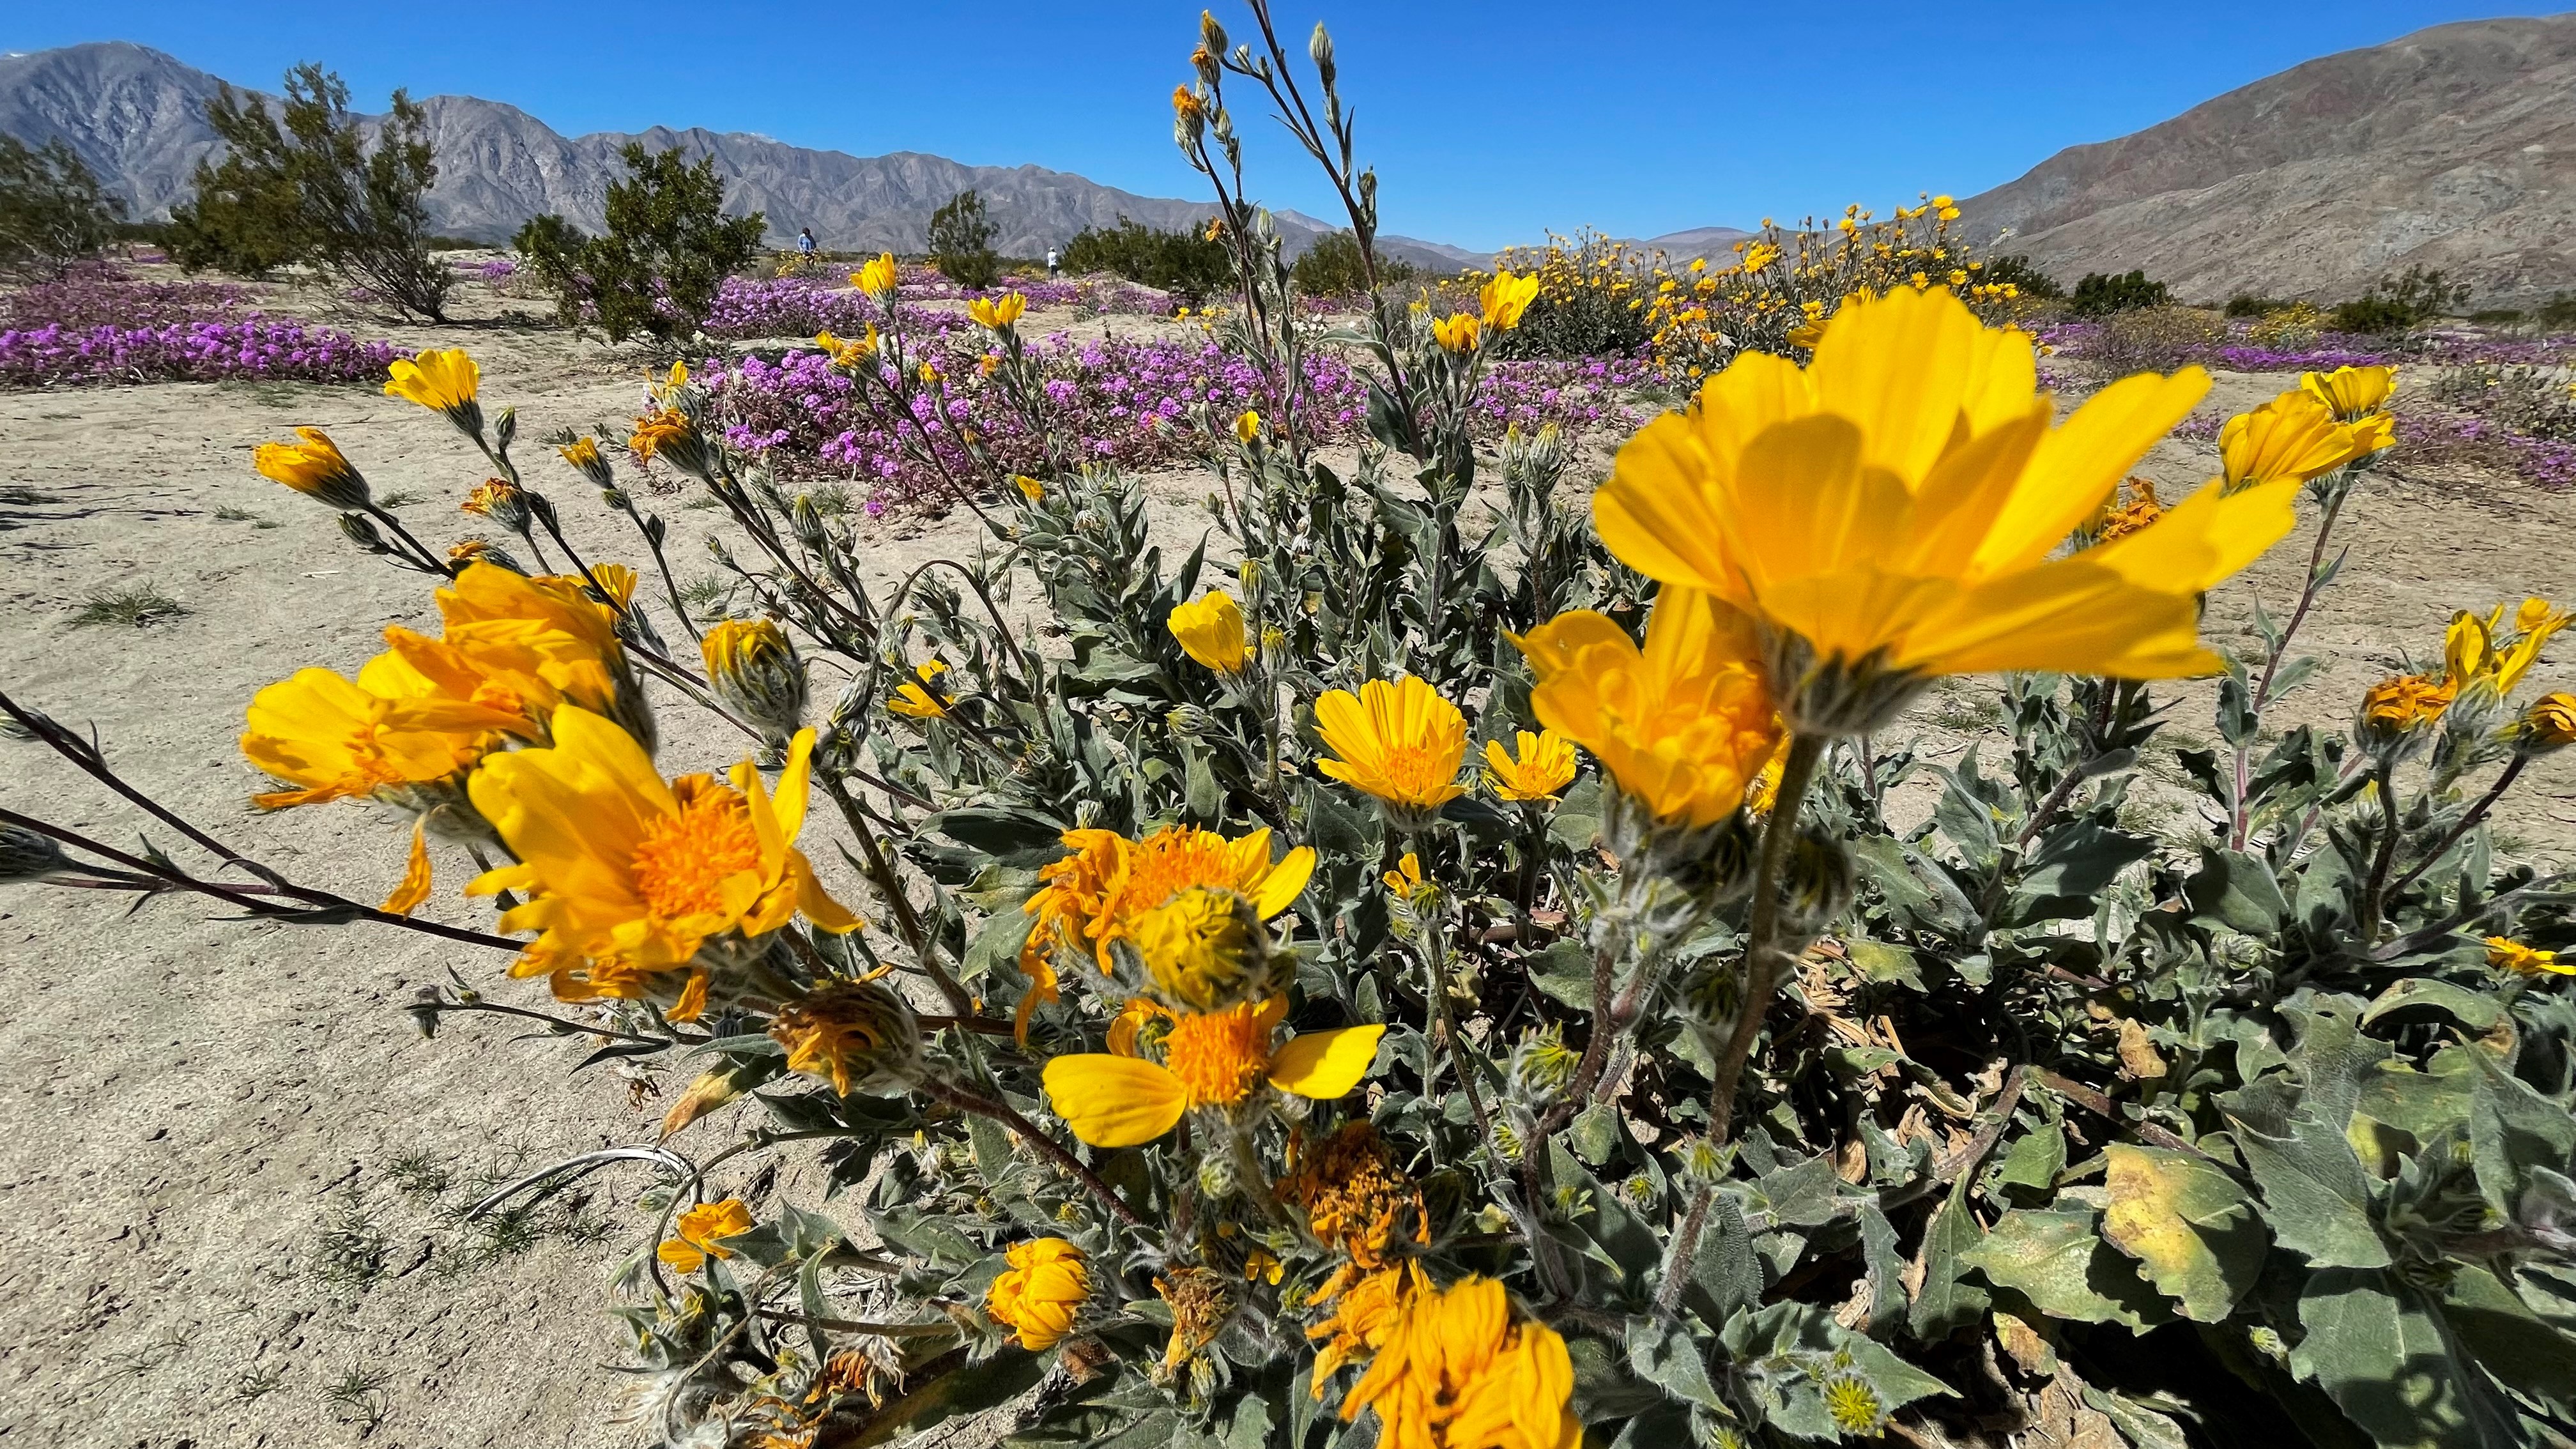 An Unusual 'Super Bloom' is Happening in the Anza-Borrego Desert